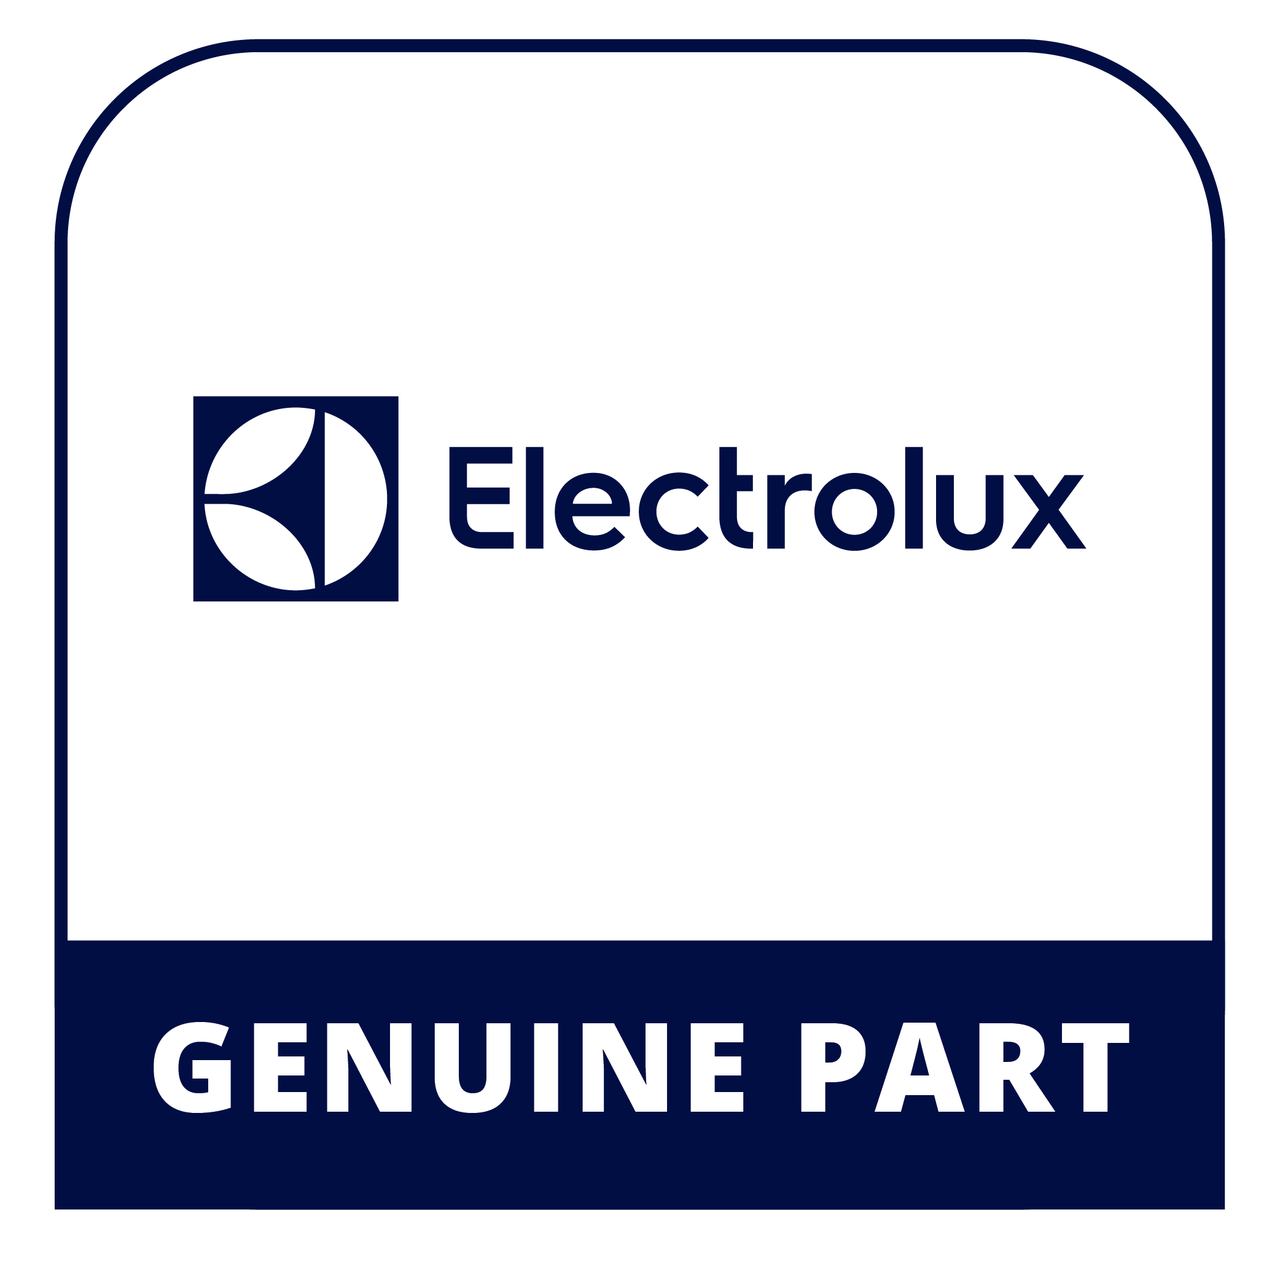 Frigidaire - Electrolux 5304500346 Latch Assembly - Genuine Electrolux Part